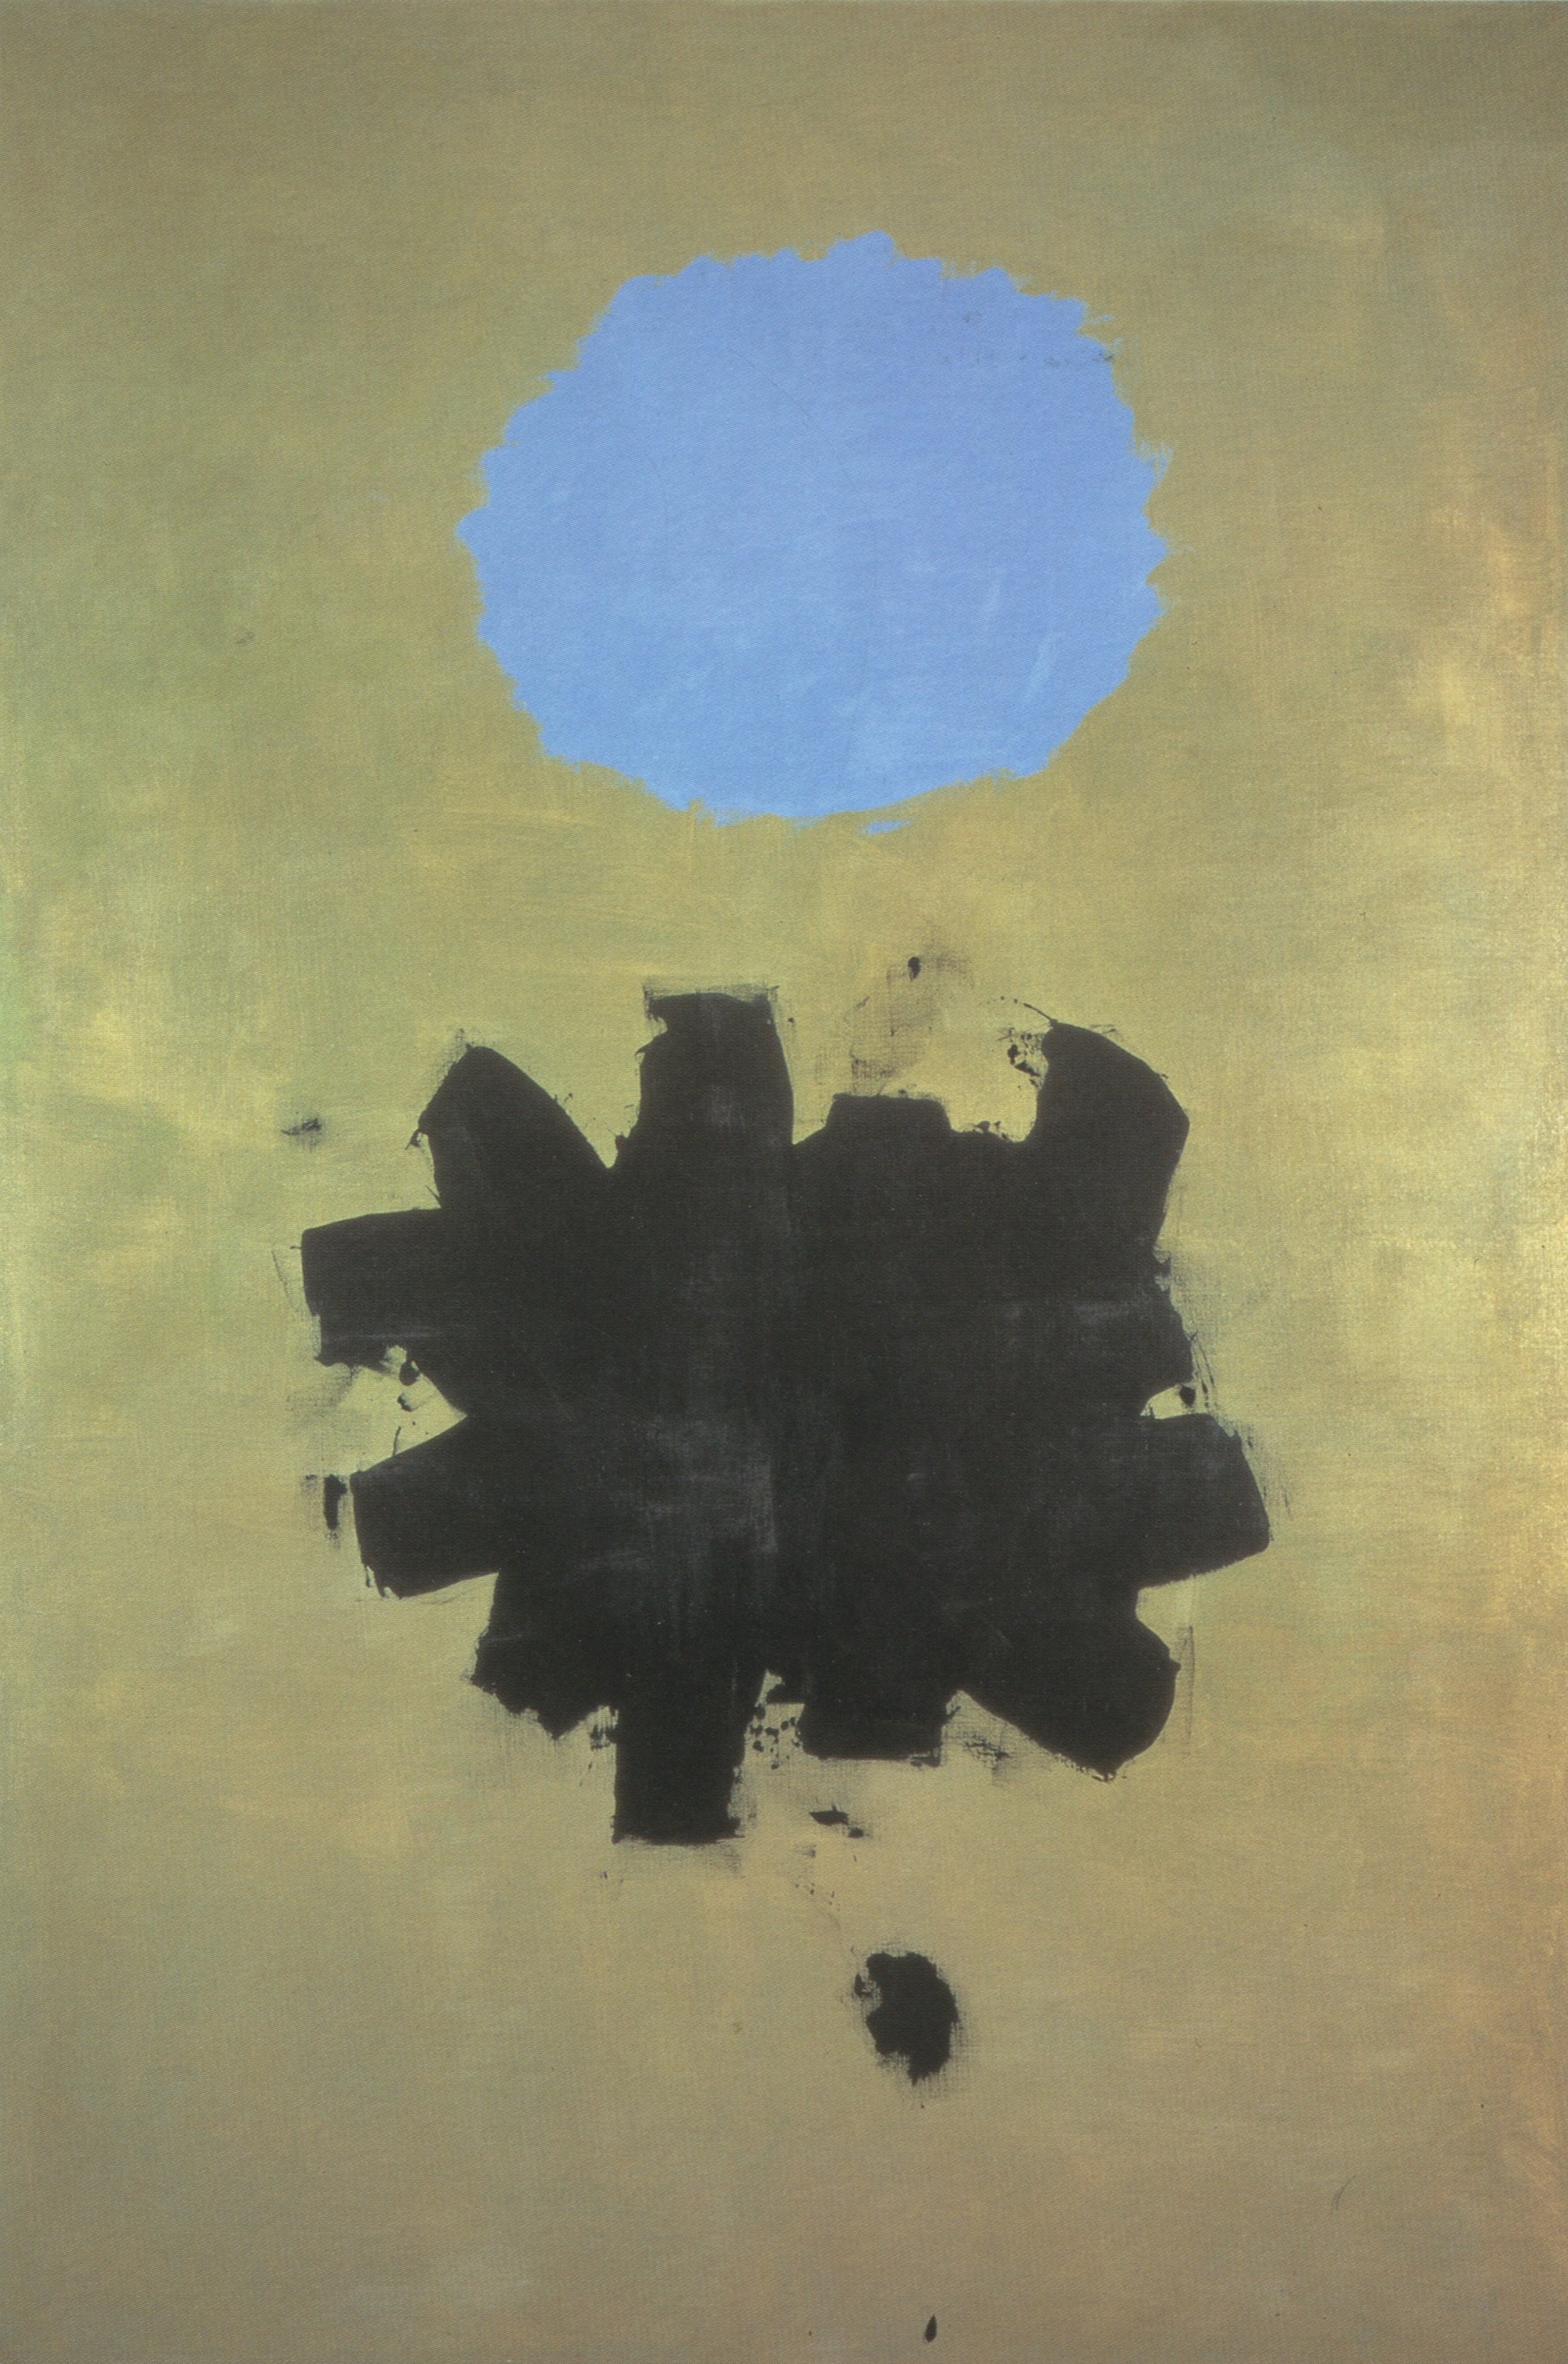  Adolph Gottlieb  Soft Blue - Soft Black  1960 oil on canvas 90 x 60 inches 